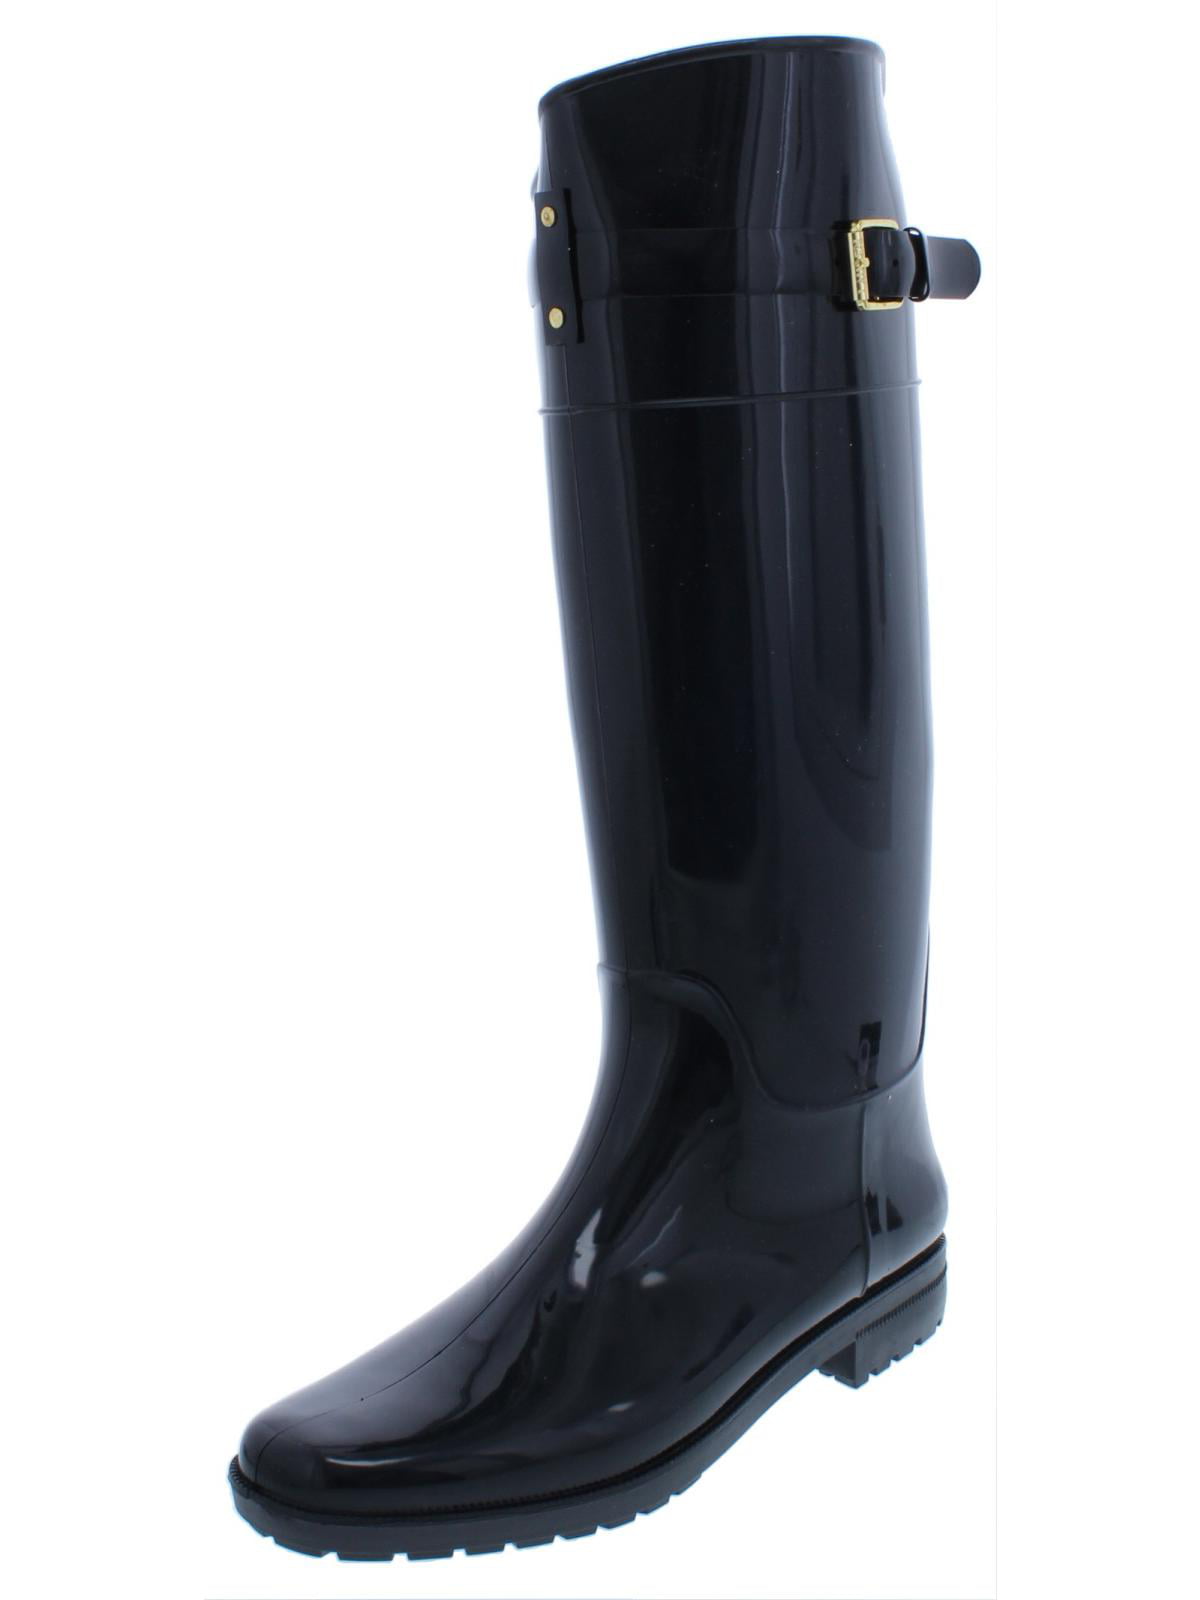 polo rain boots womens